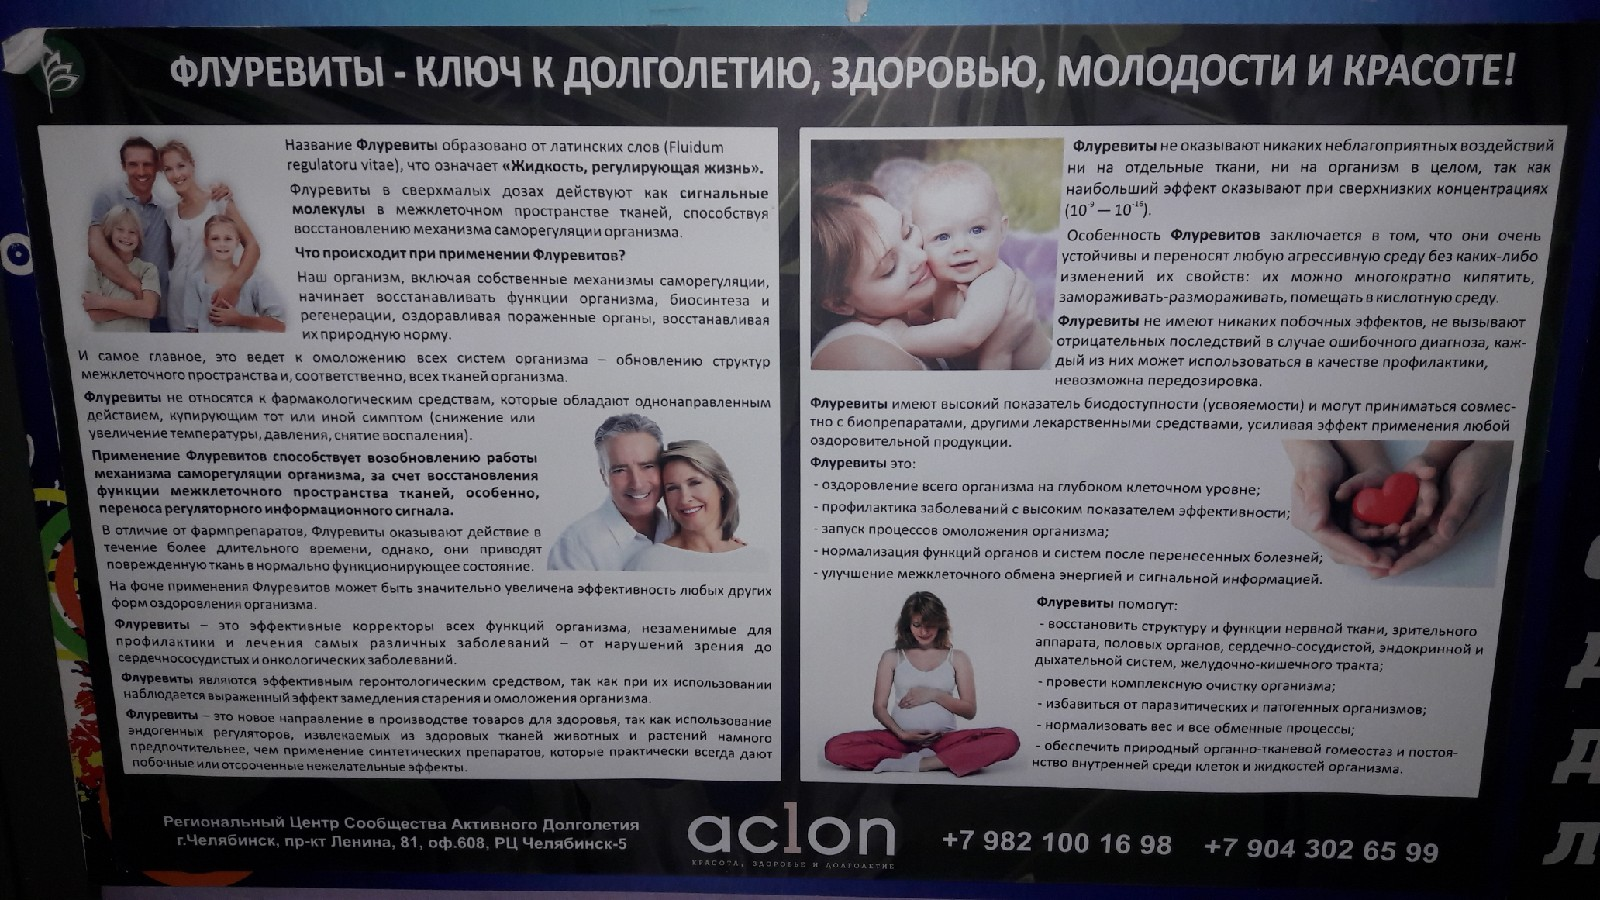 New Chelyabinsk homeopathy - Homeopathy, Pseudoscience